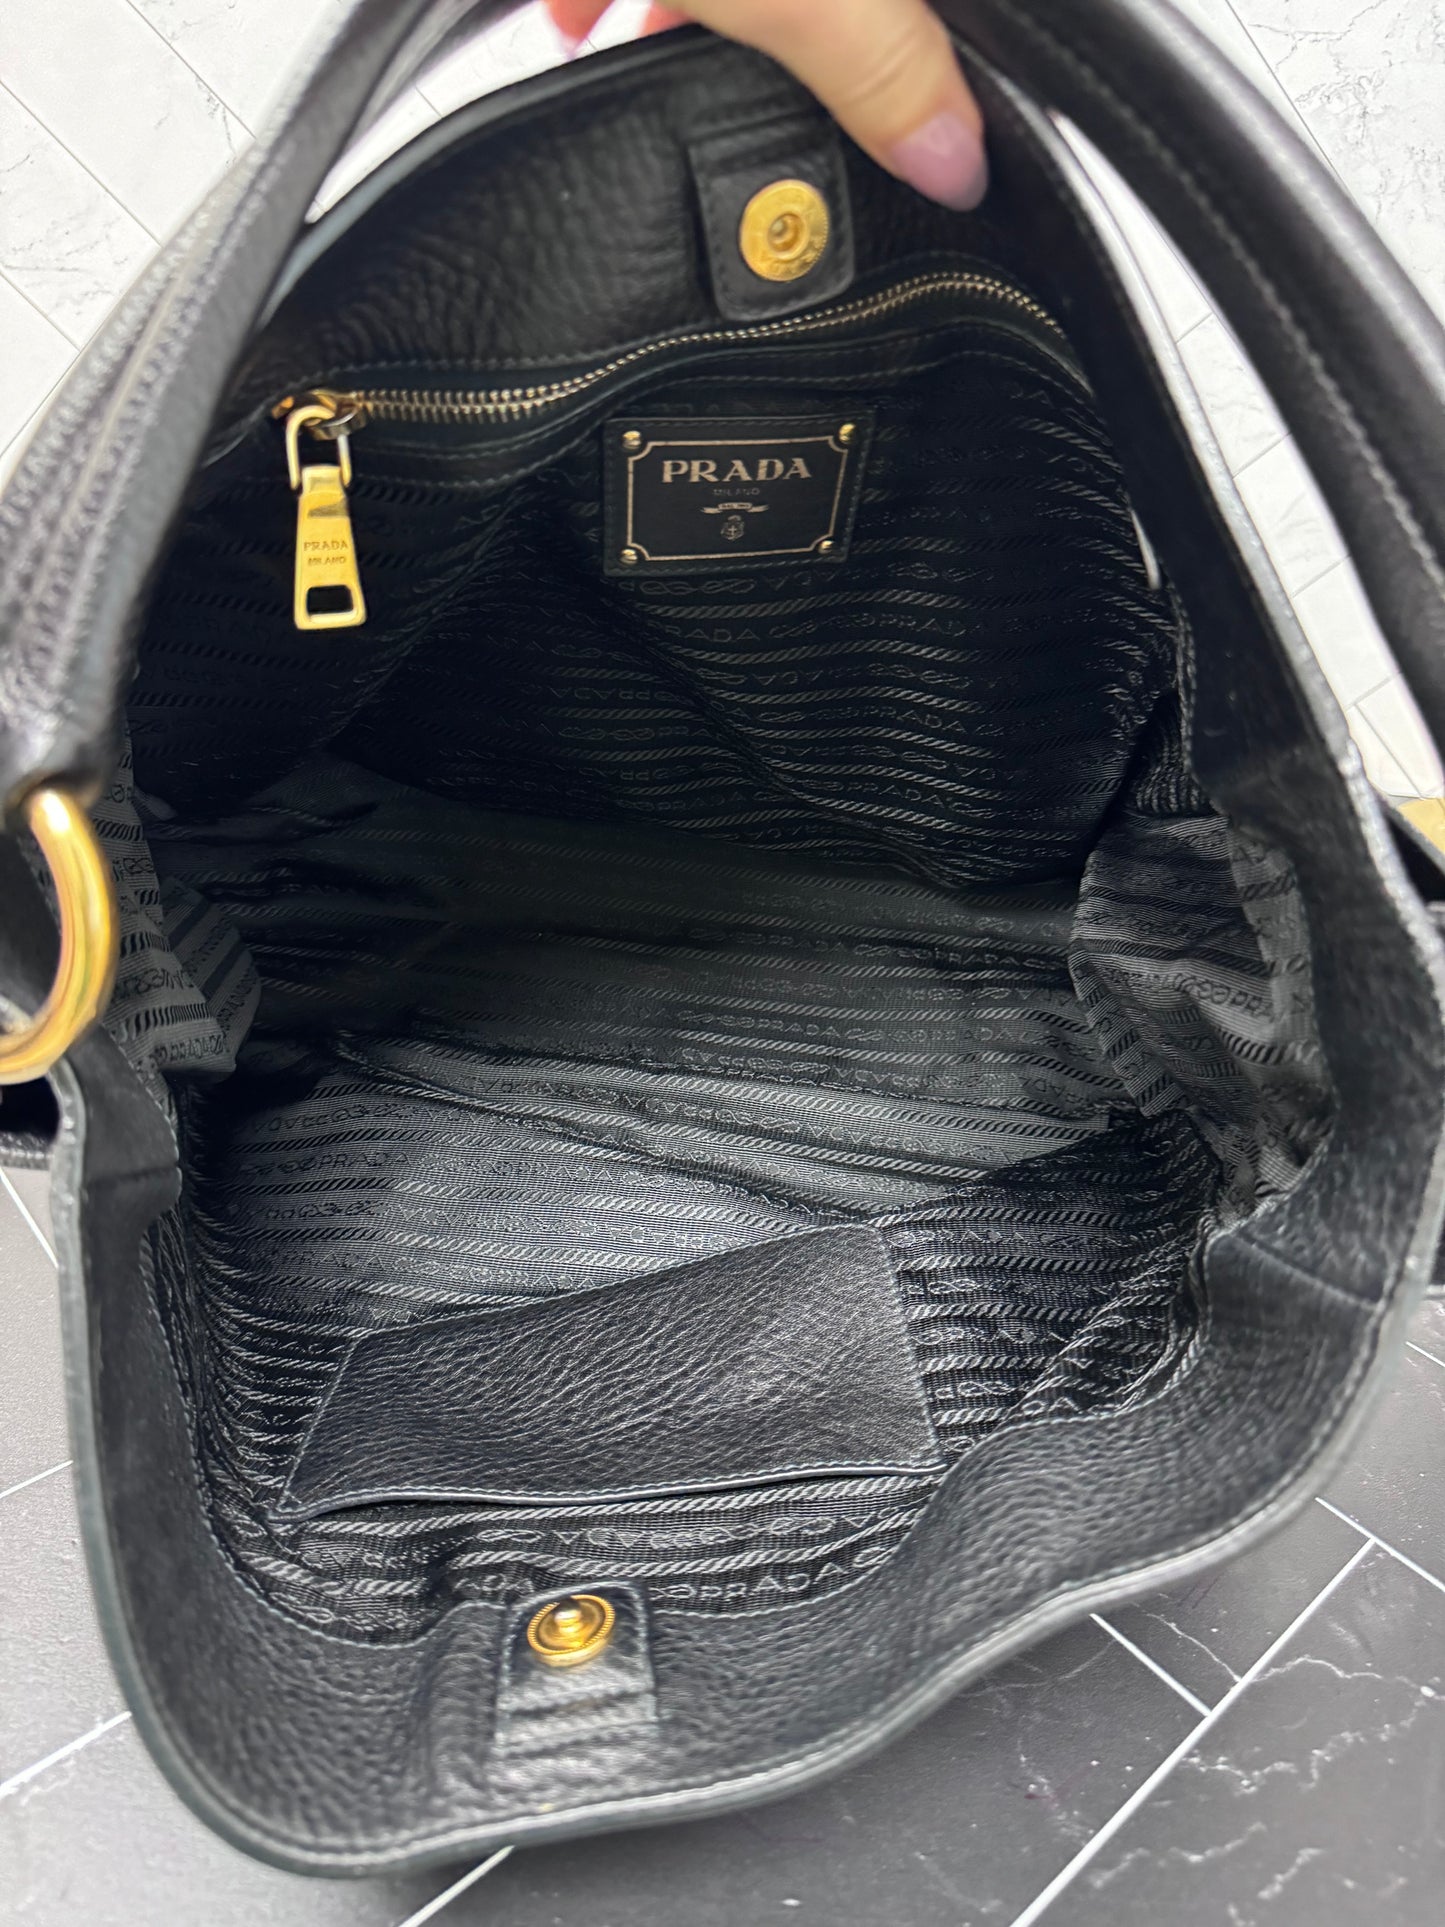 Prada Black Leather Hobo Bag